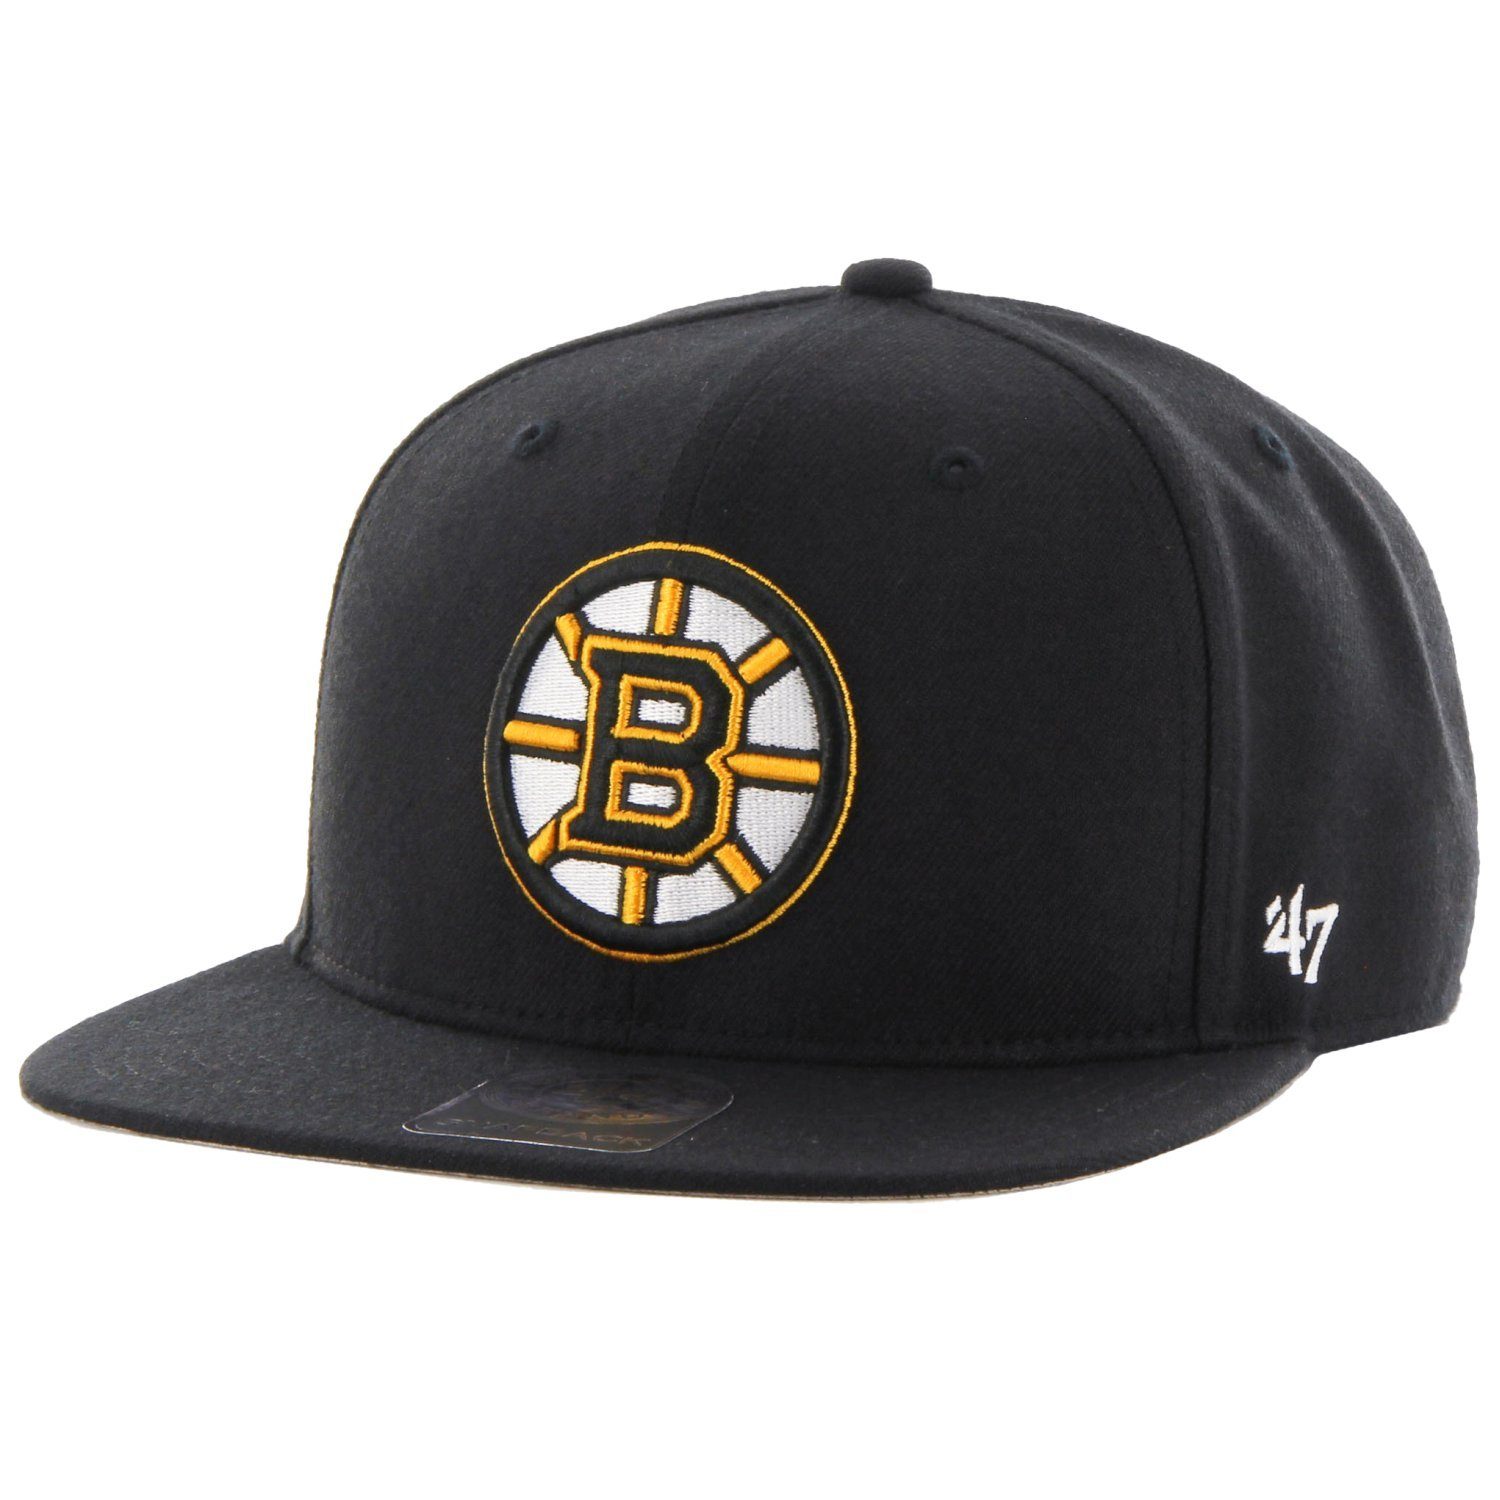 '47 Brand Snapback Cap CAPTAIN Boston Bruins